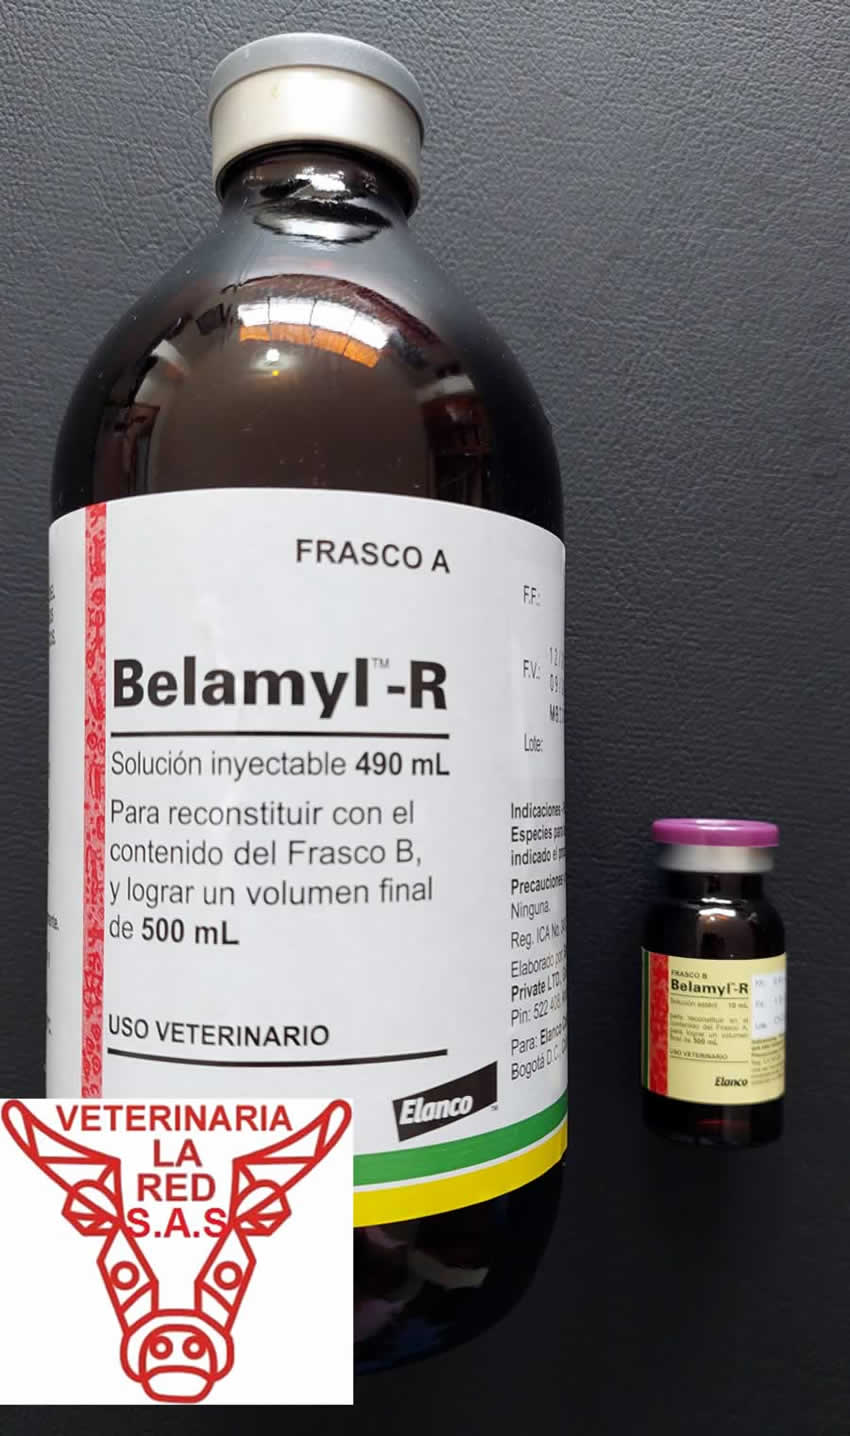 Belamyl-R